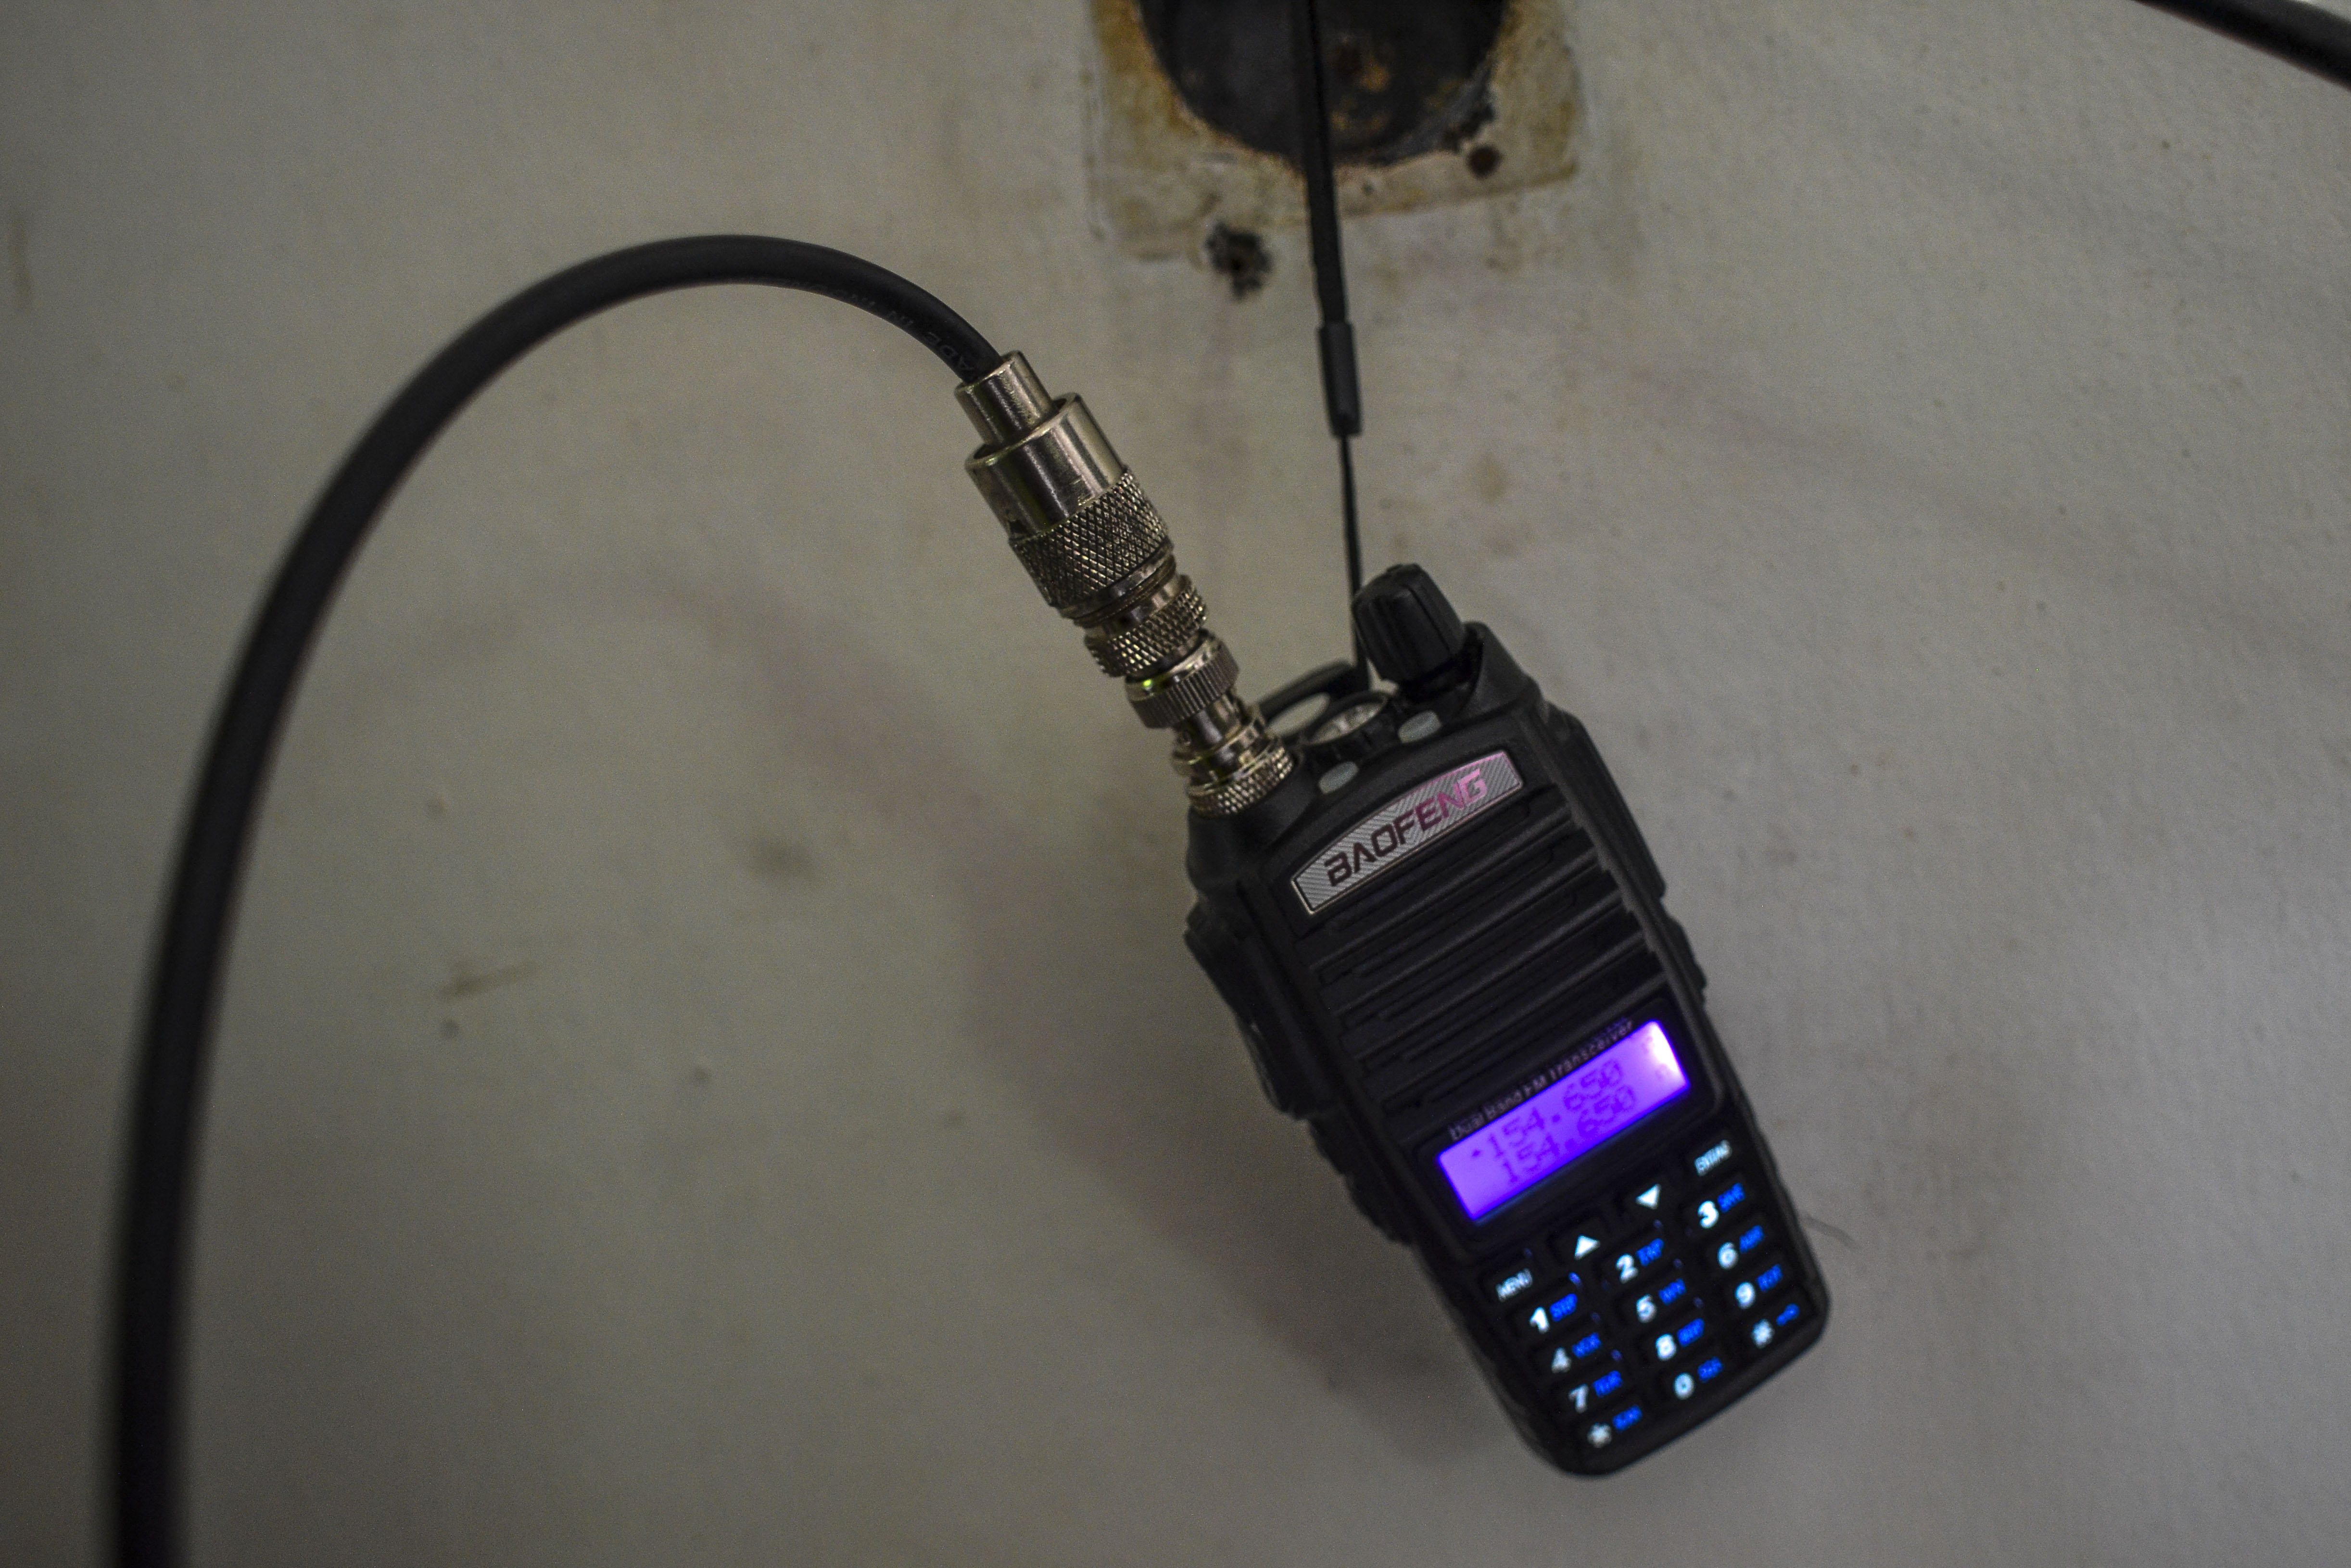 Detail radio Handy Talky yang menggunakan antena tambahan yang digunakan saat pembelajaran jarak jauh di Dusun Ciakar, Desa Pasawahan, Kecamatan Banjaranyar Kabupaten Ciamis, Jawa Barat.